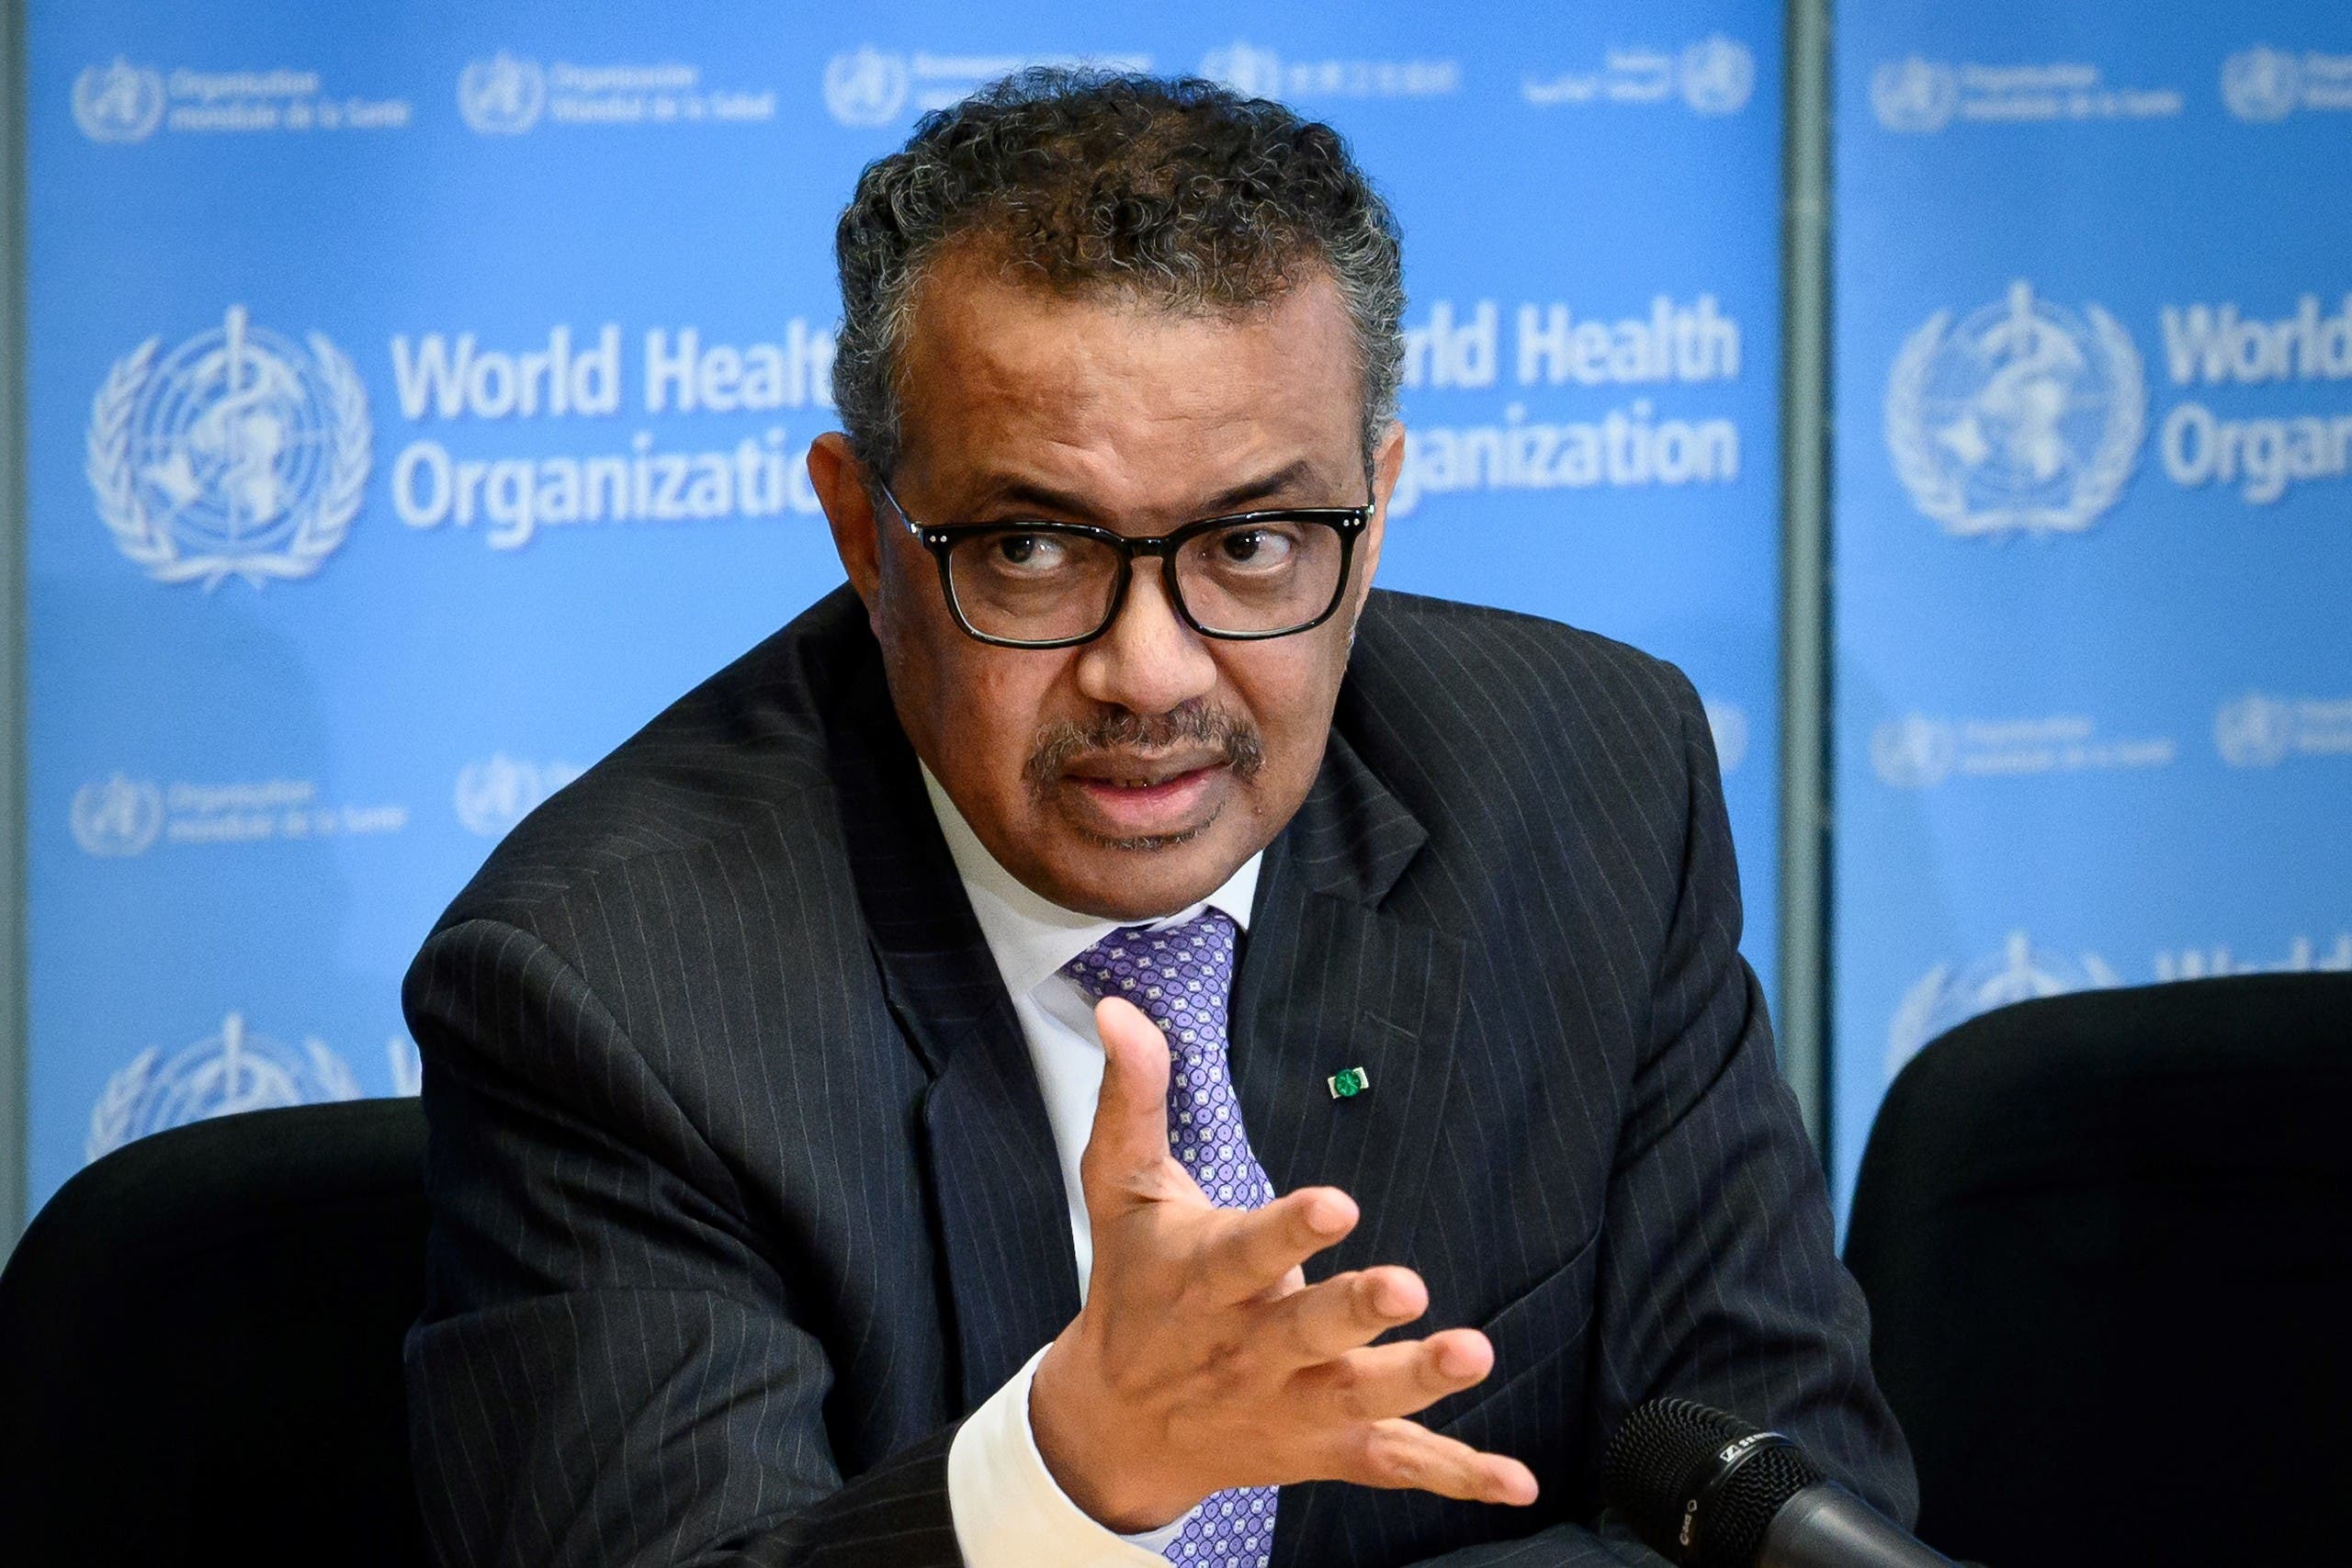 Director of the World Health Organization